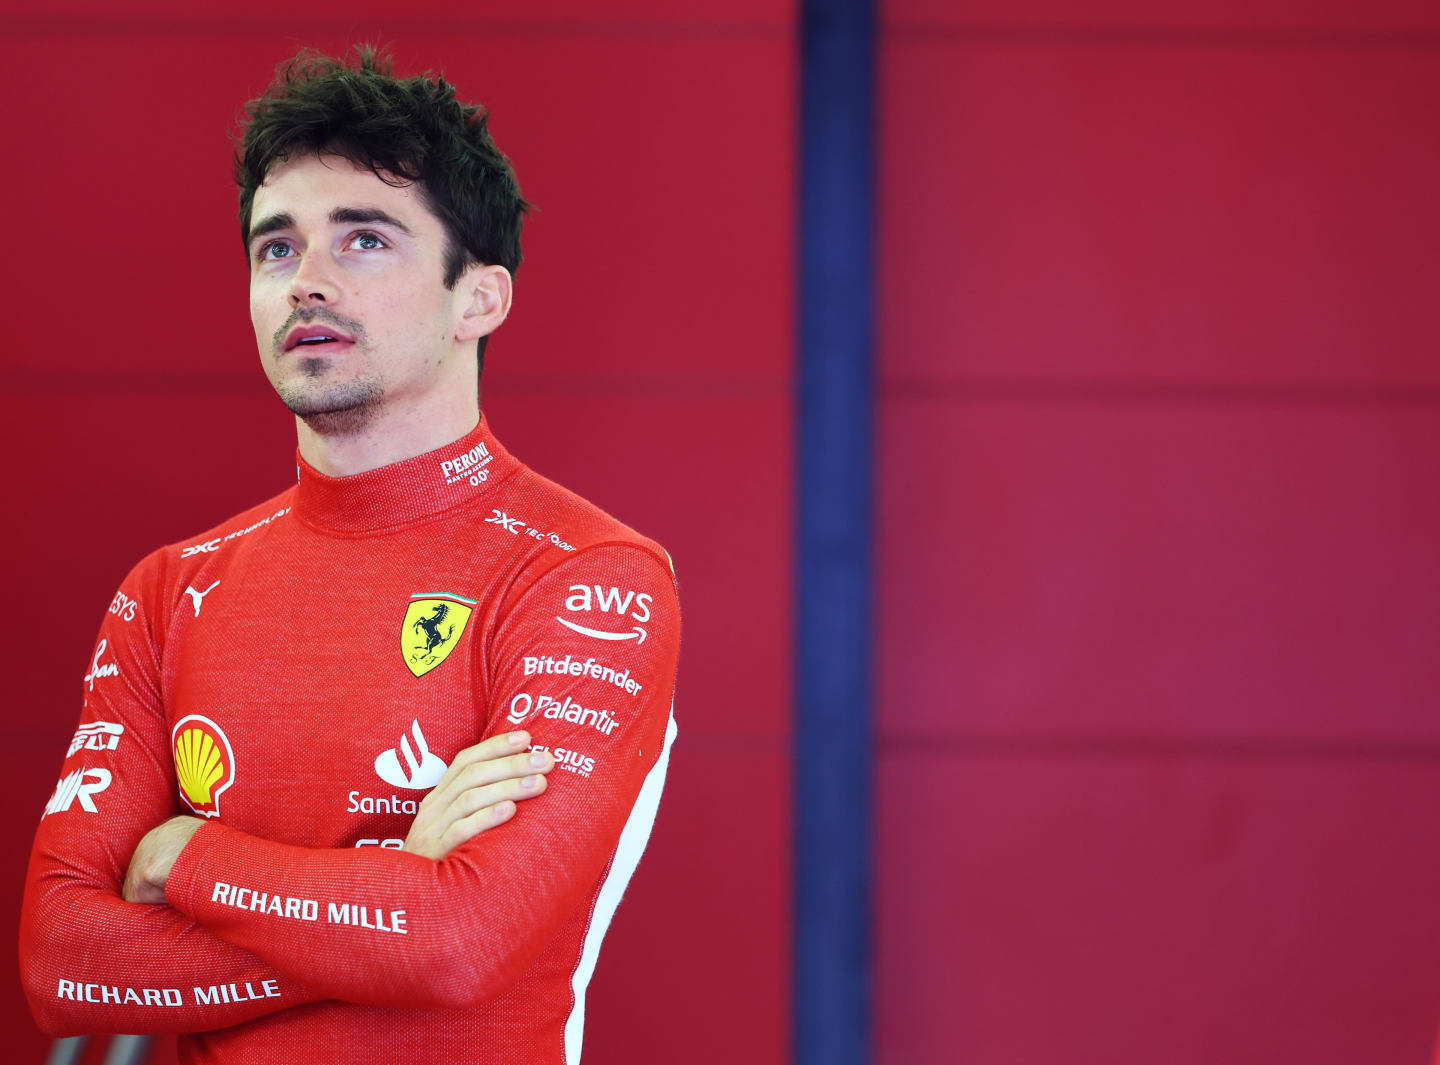 BAHRAIN, BAHRAIN - FEBRUARY 23: Charles Leclerc of Monaco and Ferrari looks on in the garage during